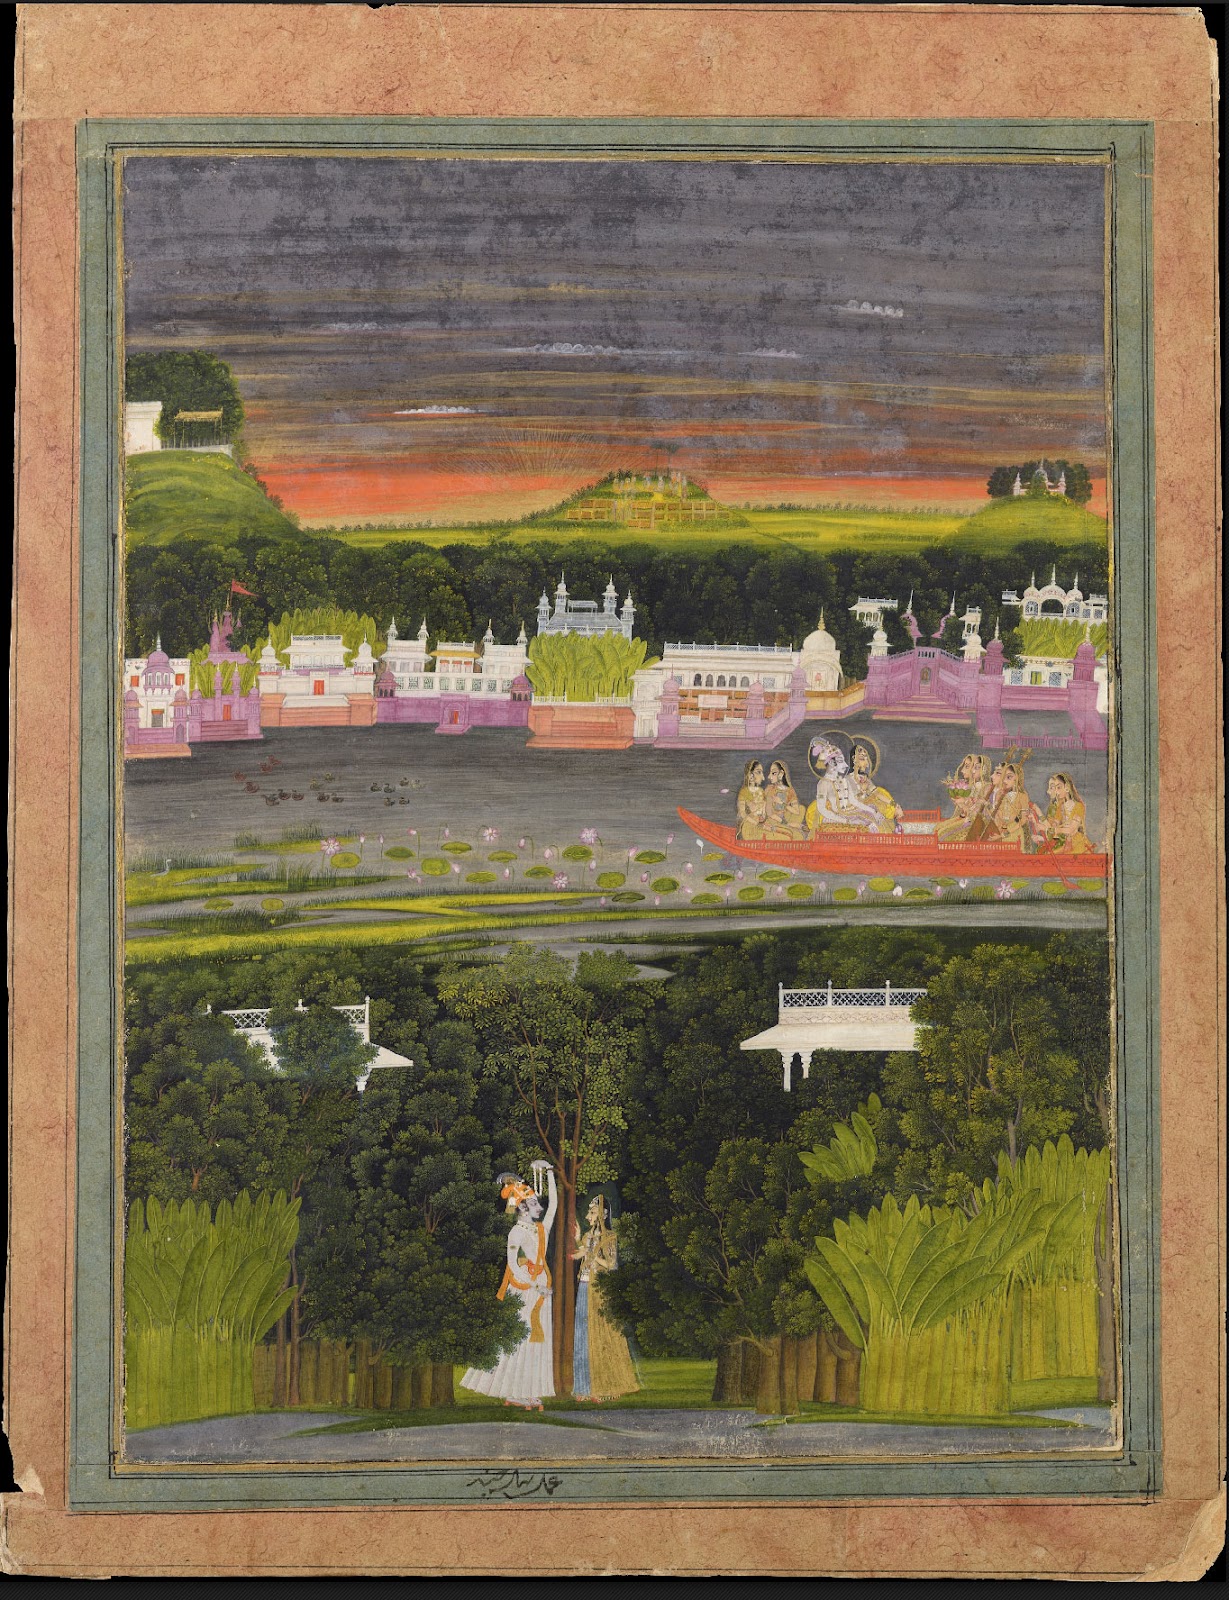 Radha and Krishna în barca iubirii by Nihal Chand - 1750 - 43 cm x 34 cm 